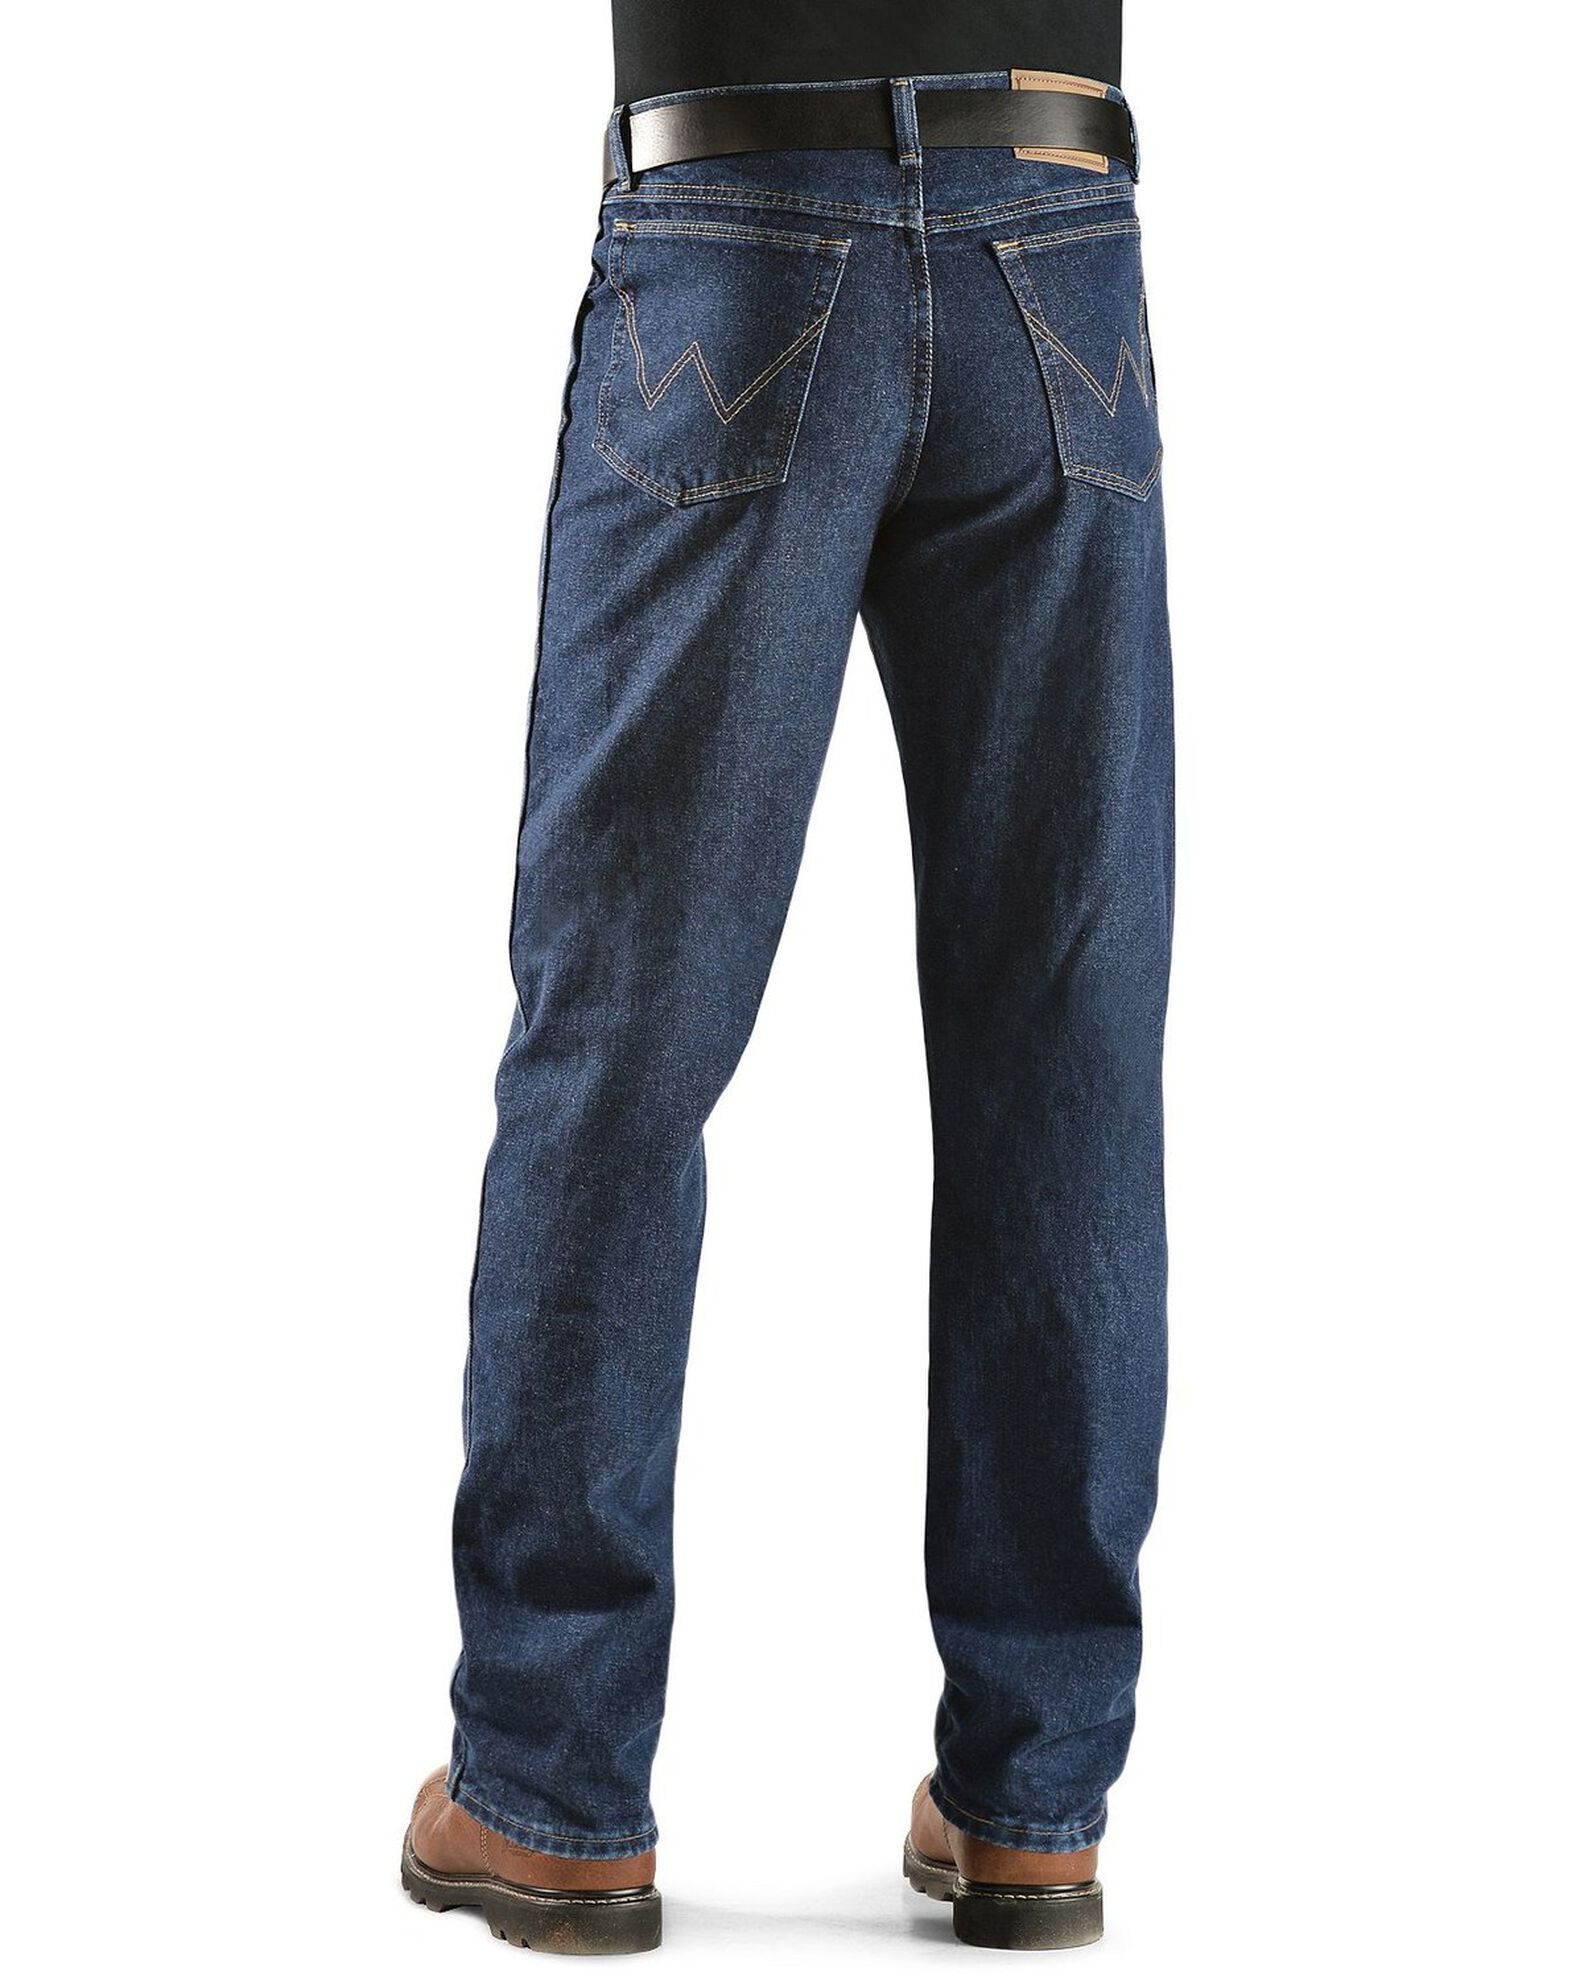 Wrangler Men's Rugged Wear Fit Jeans | Boot